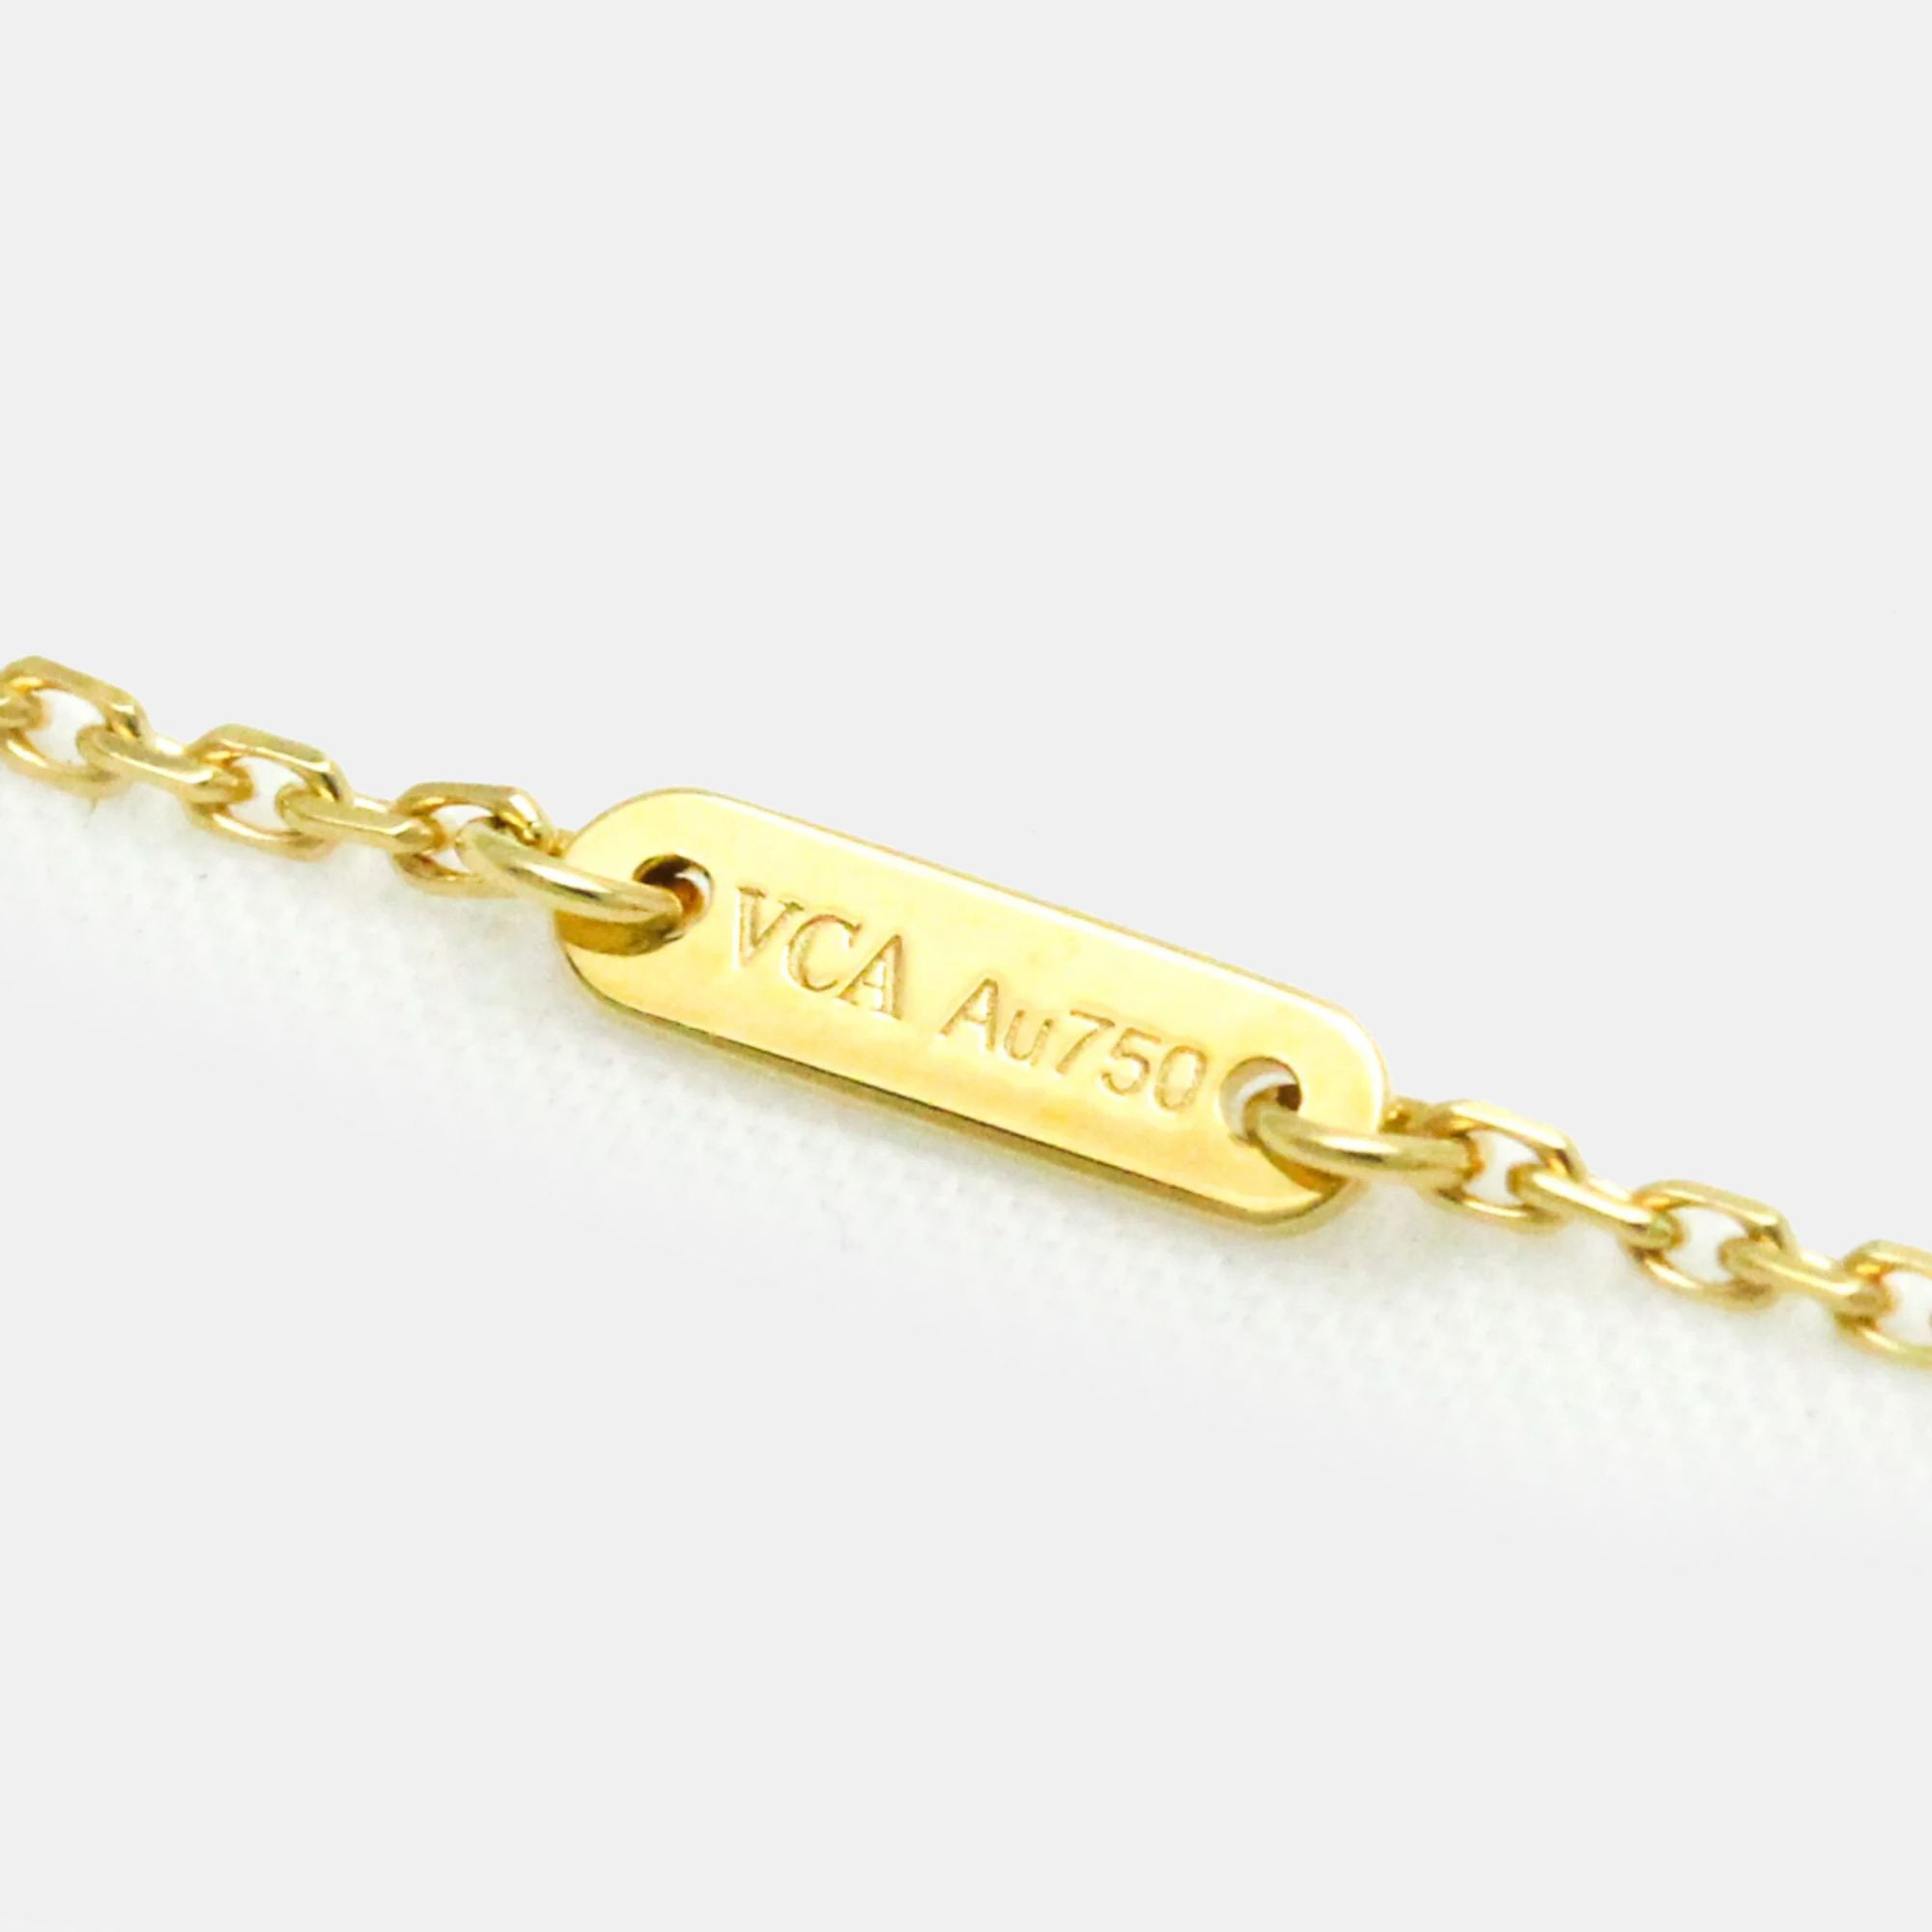 Van Cleef & Arpels 18K Yellow Gold And Diamond Frivole Pendant Necklace